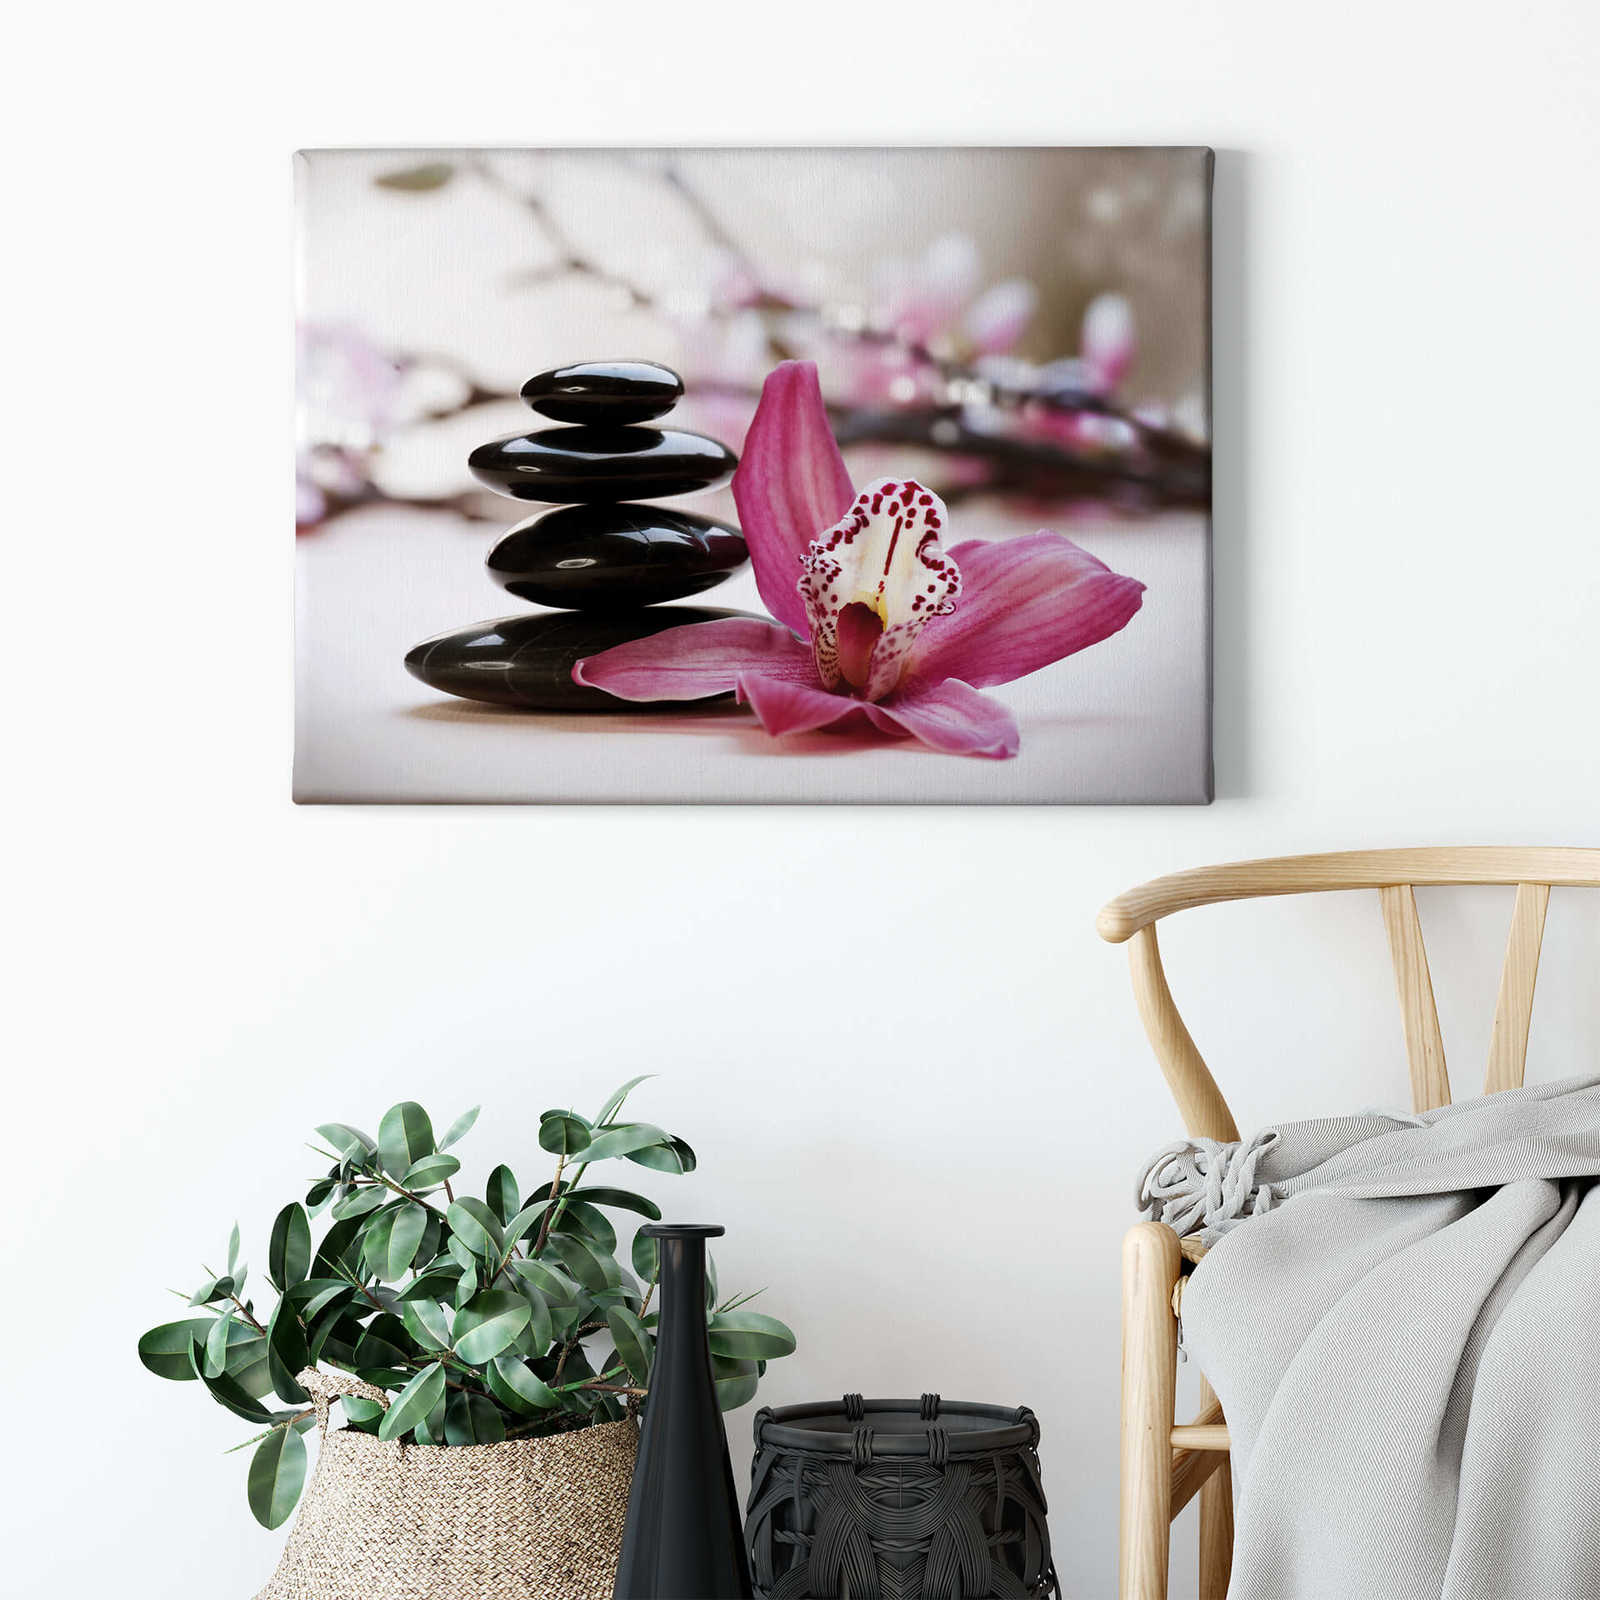             Leinwandbild Wellness Design Orchidee & Massagesteine – 0,70 m x 0,50 m
        